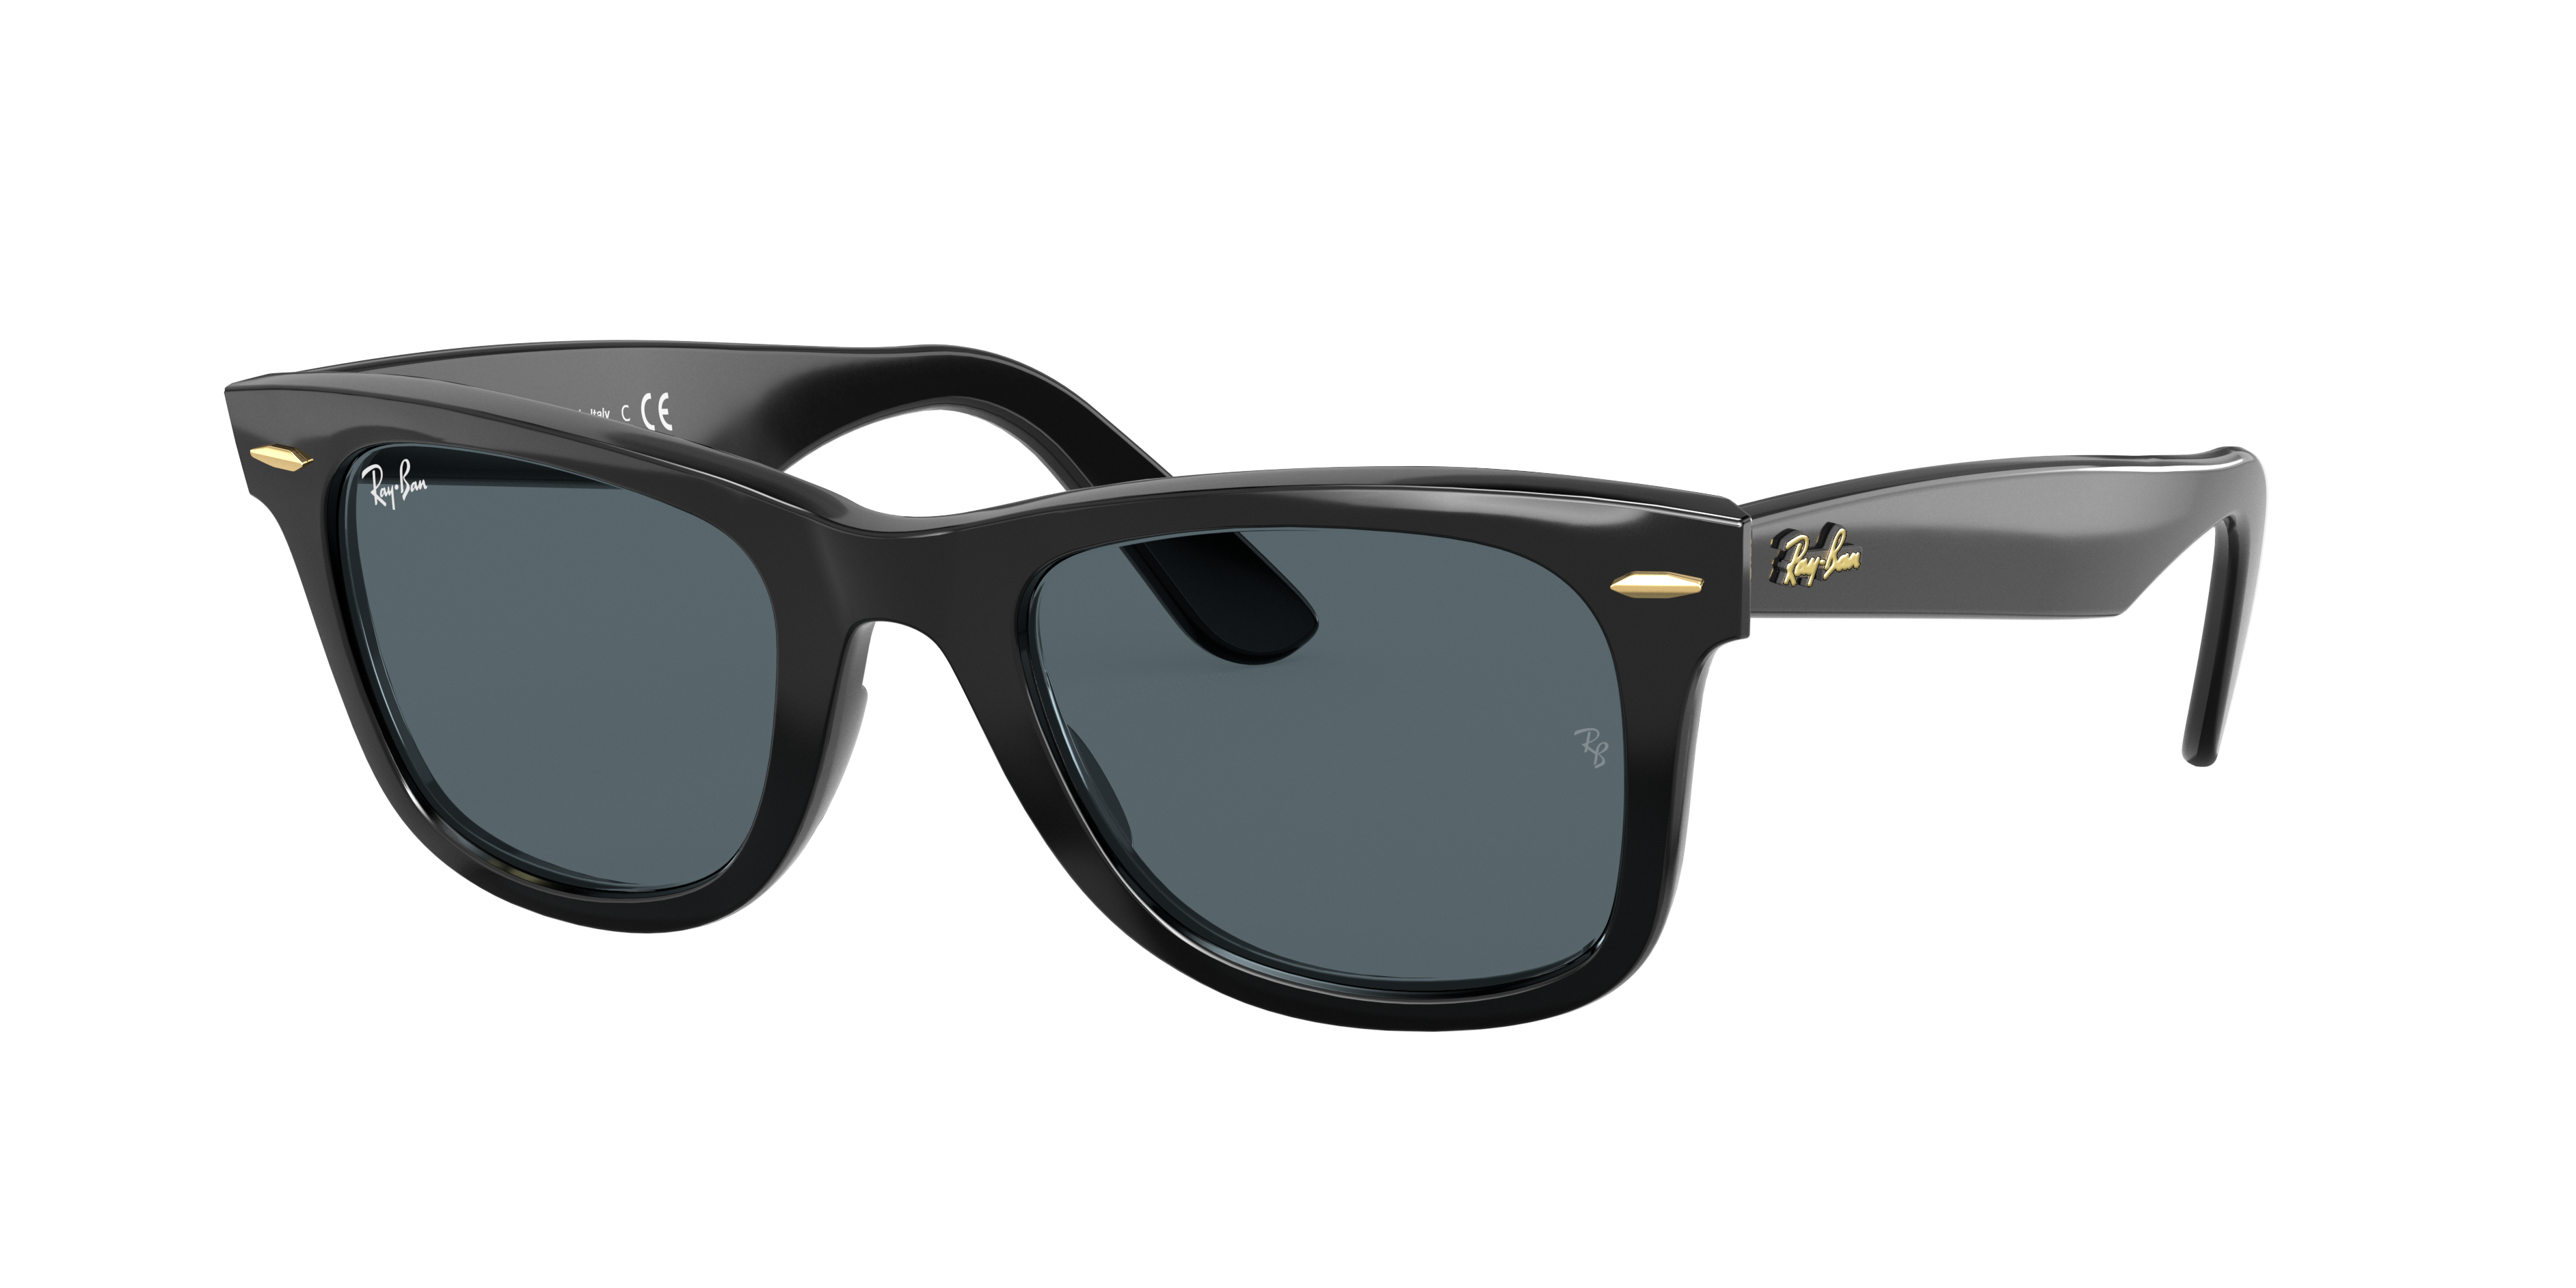 Original Wayfarer @collection Sunglasses in Black Blue/Grey